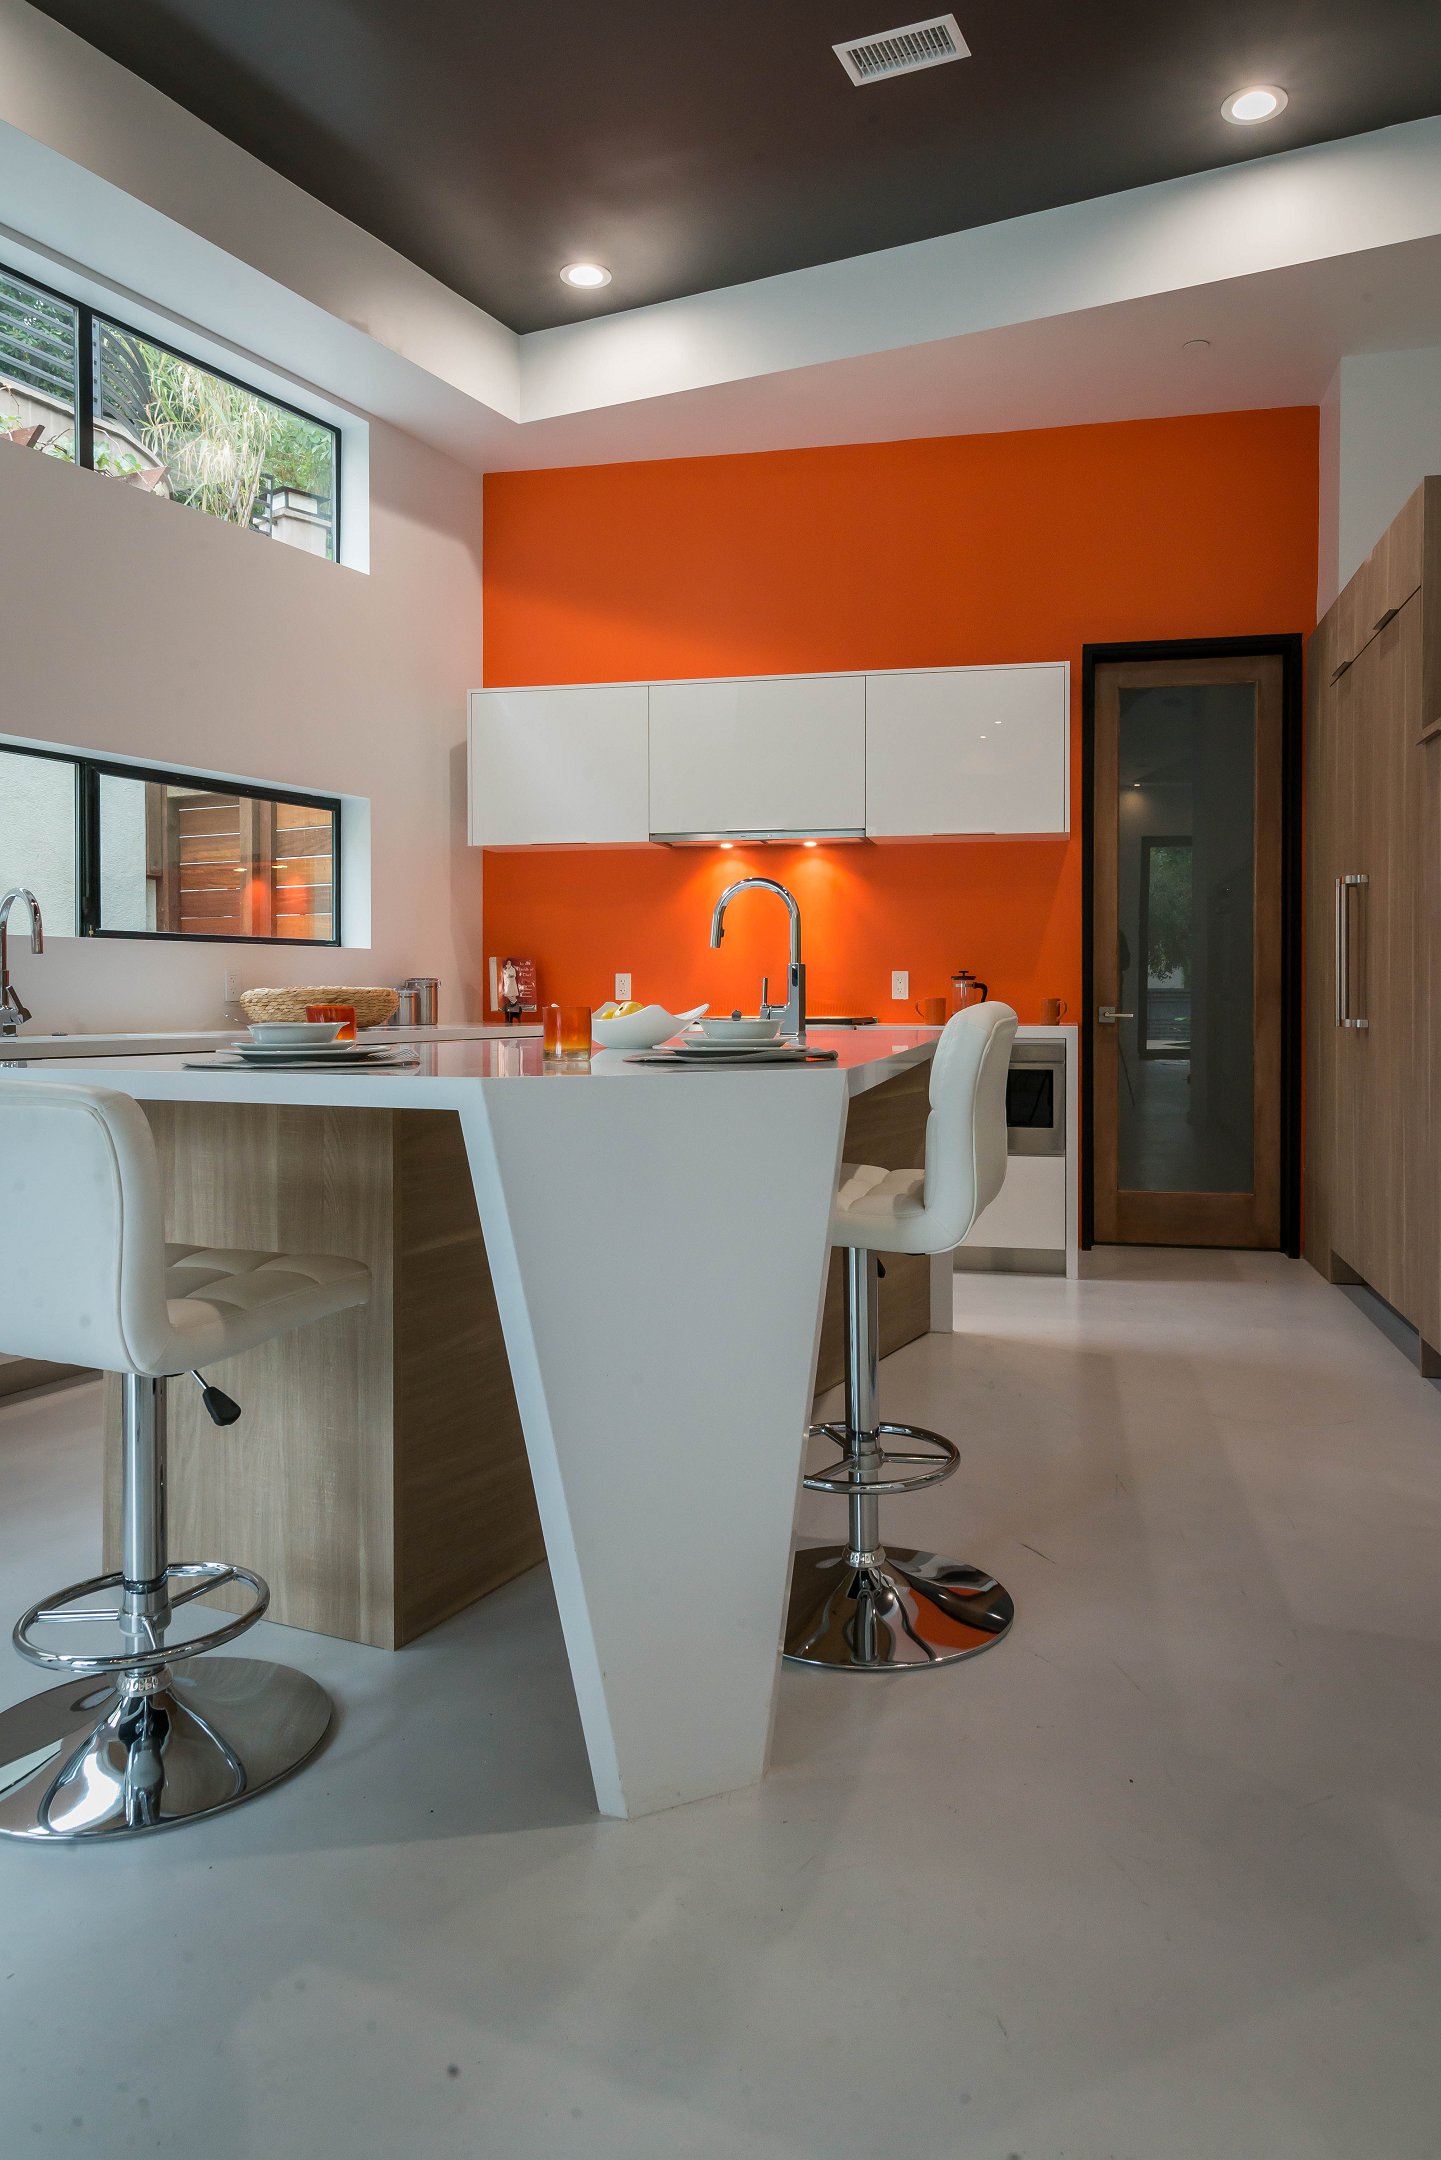 Modern kitchen with orange walls and white furniture